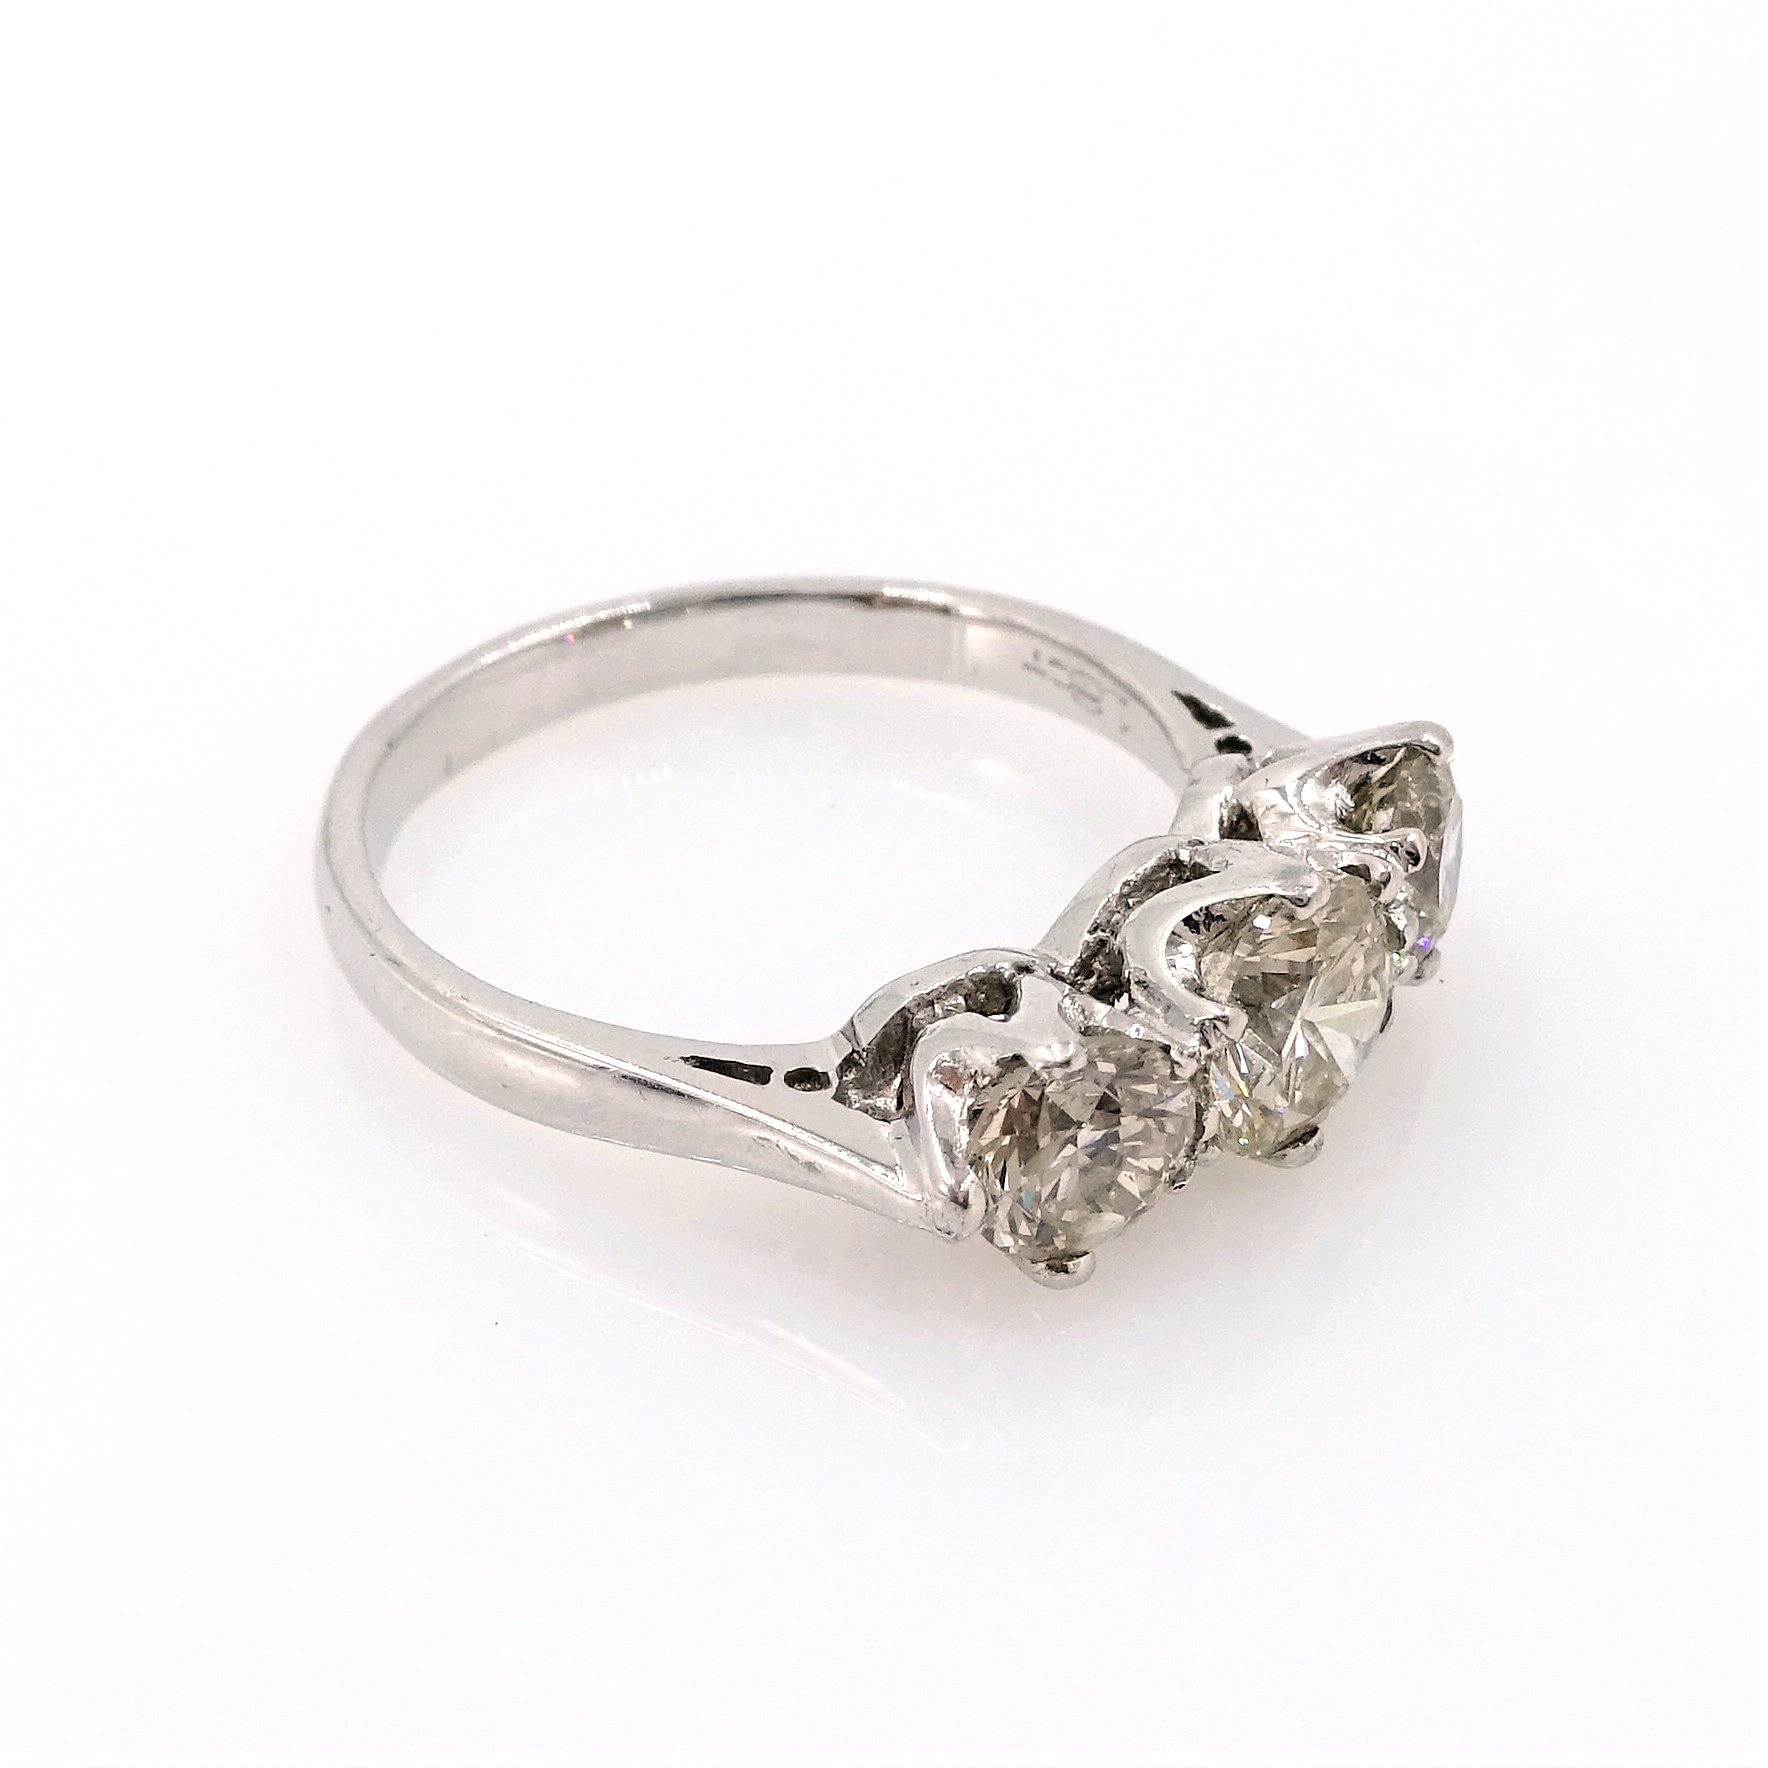 White gold three stone diamond ring stamped 18ct diamonds 1. - Image 2 of 3